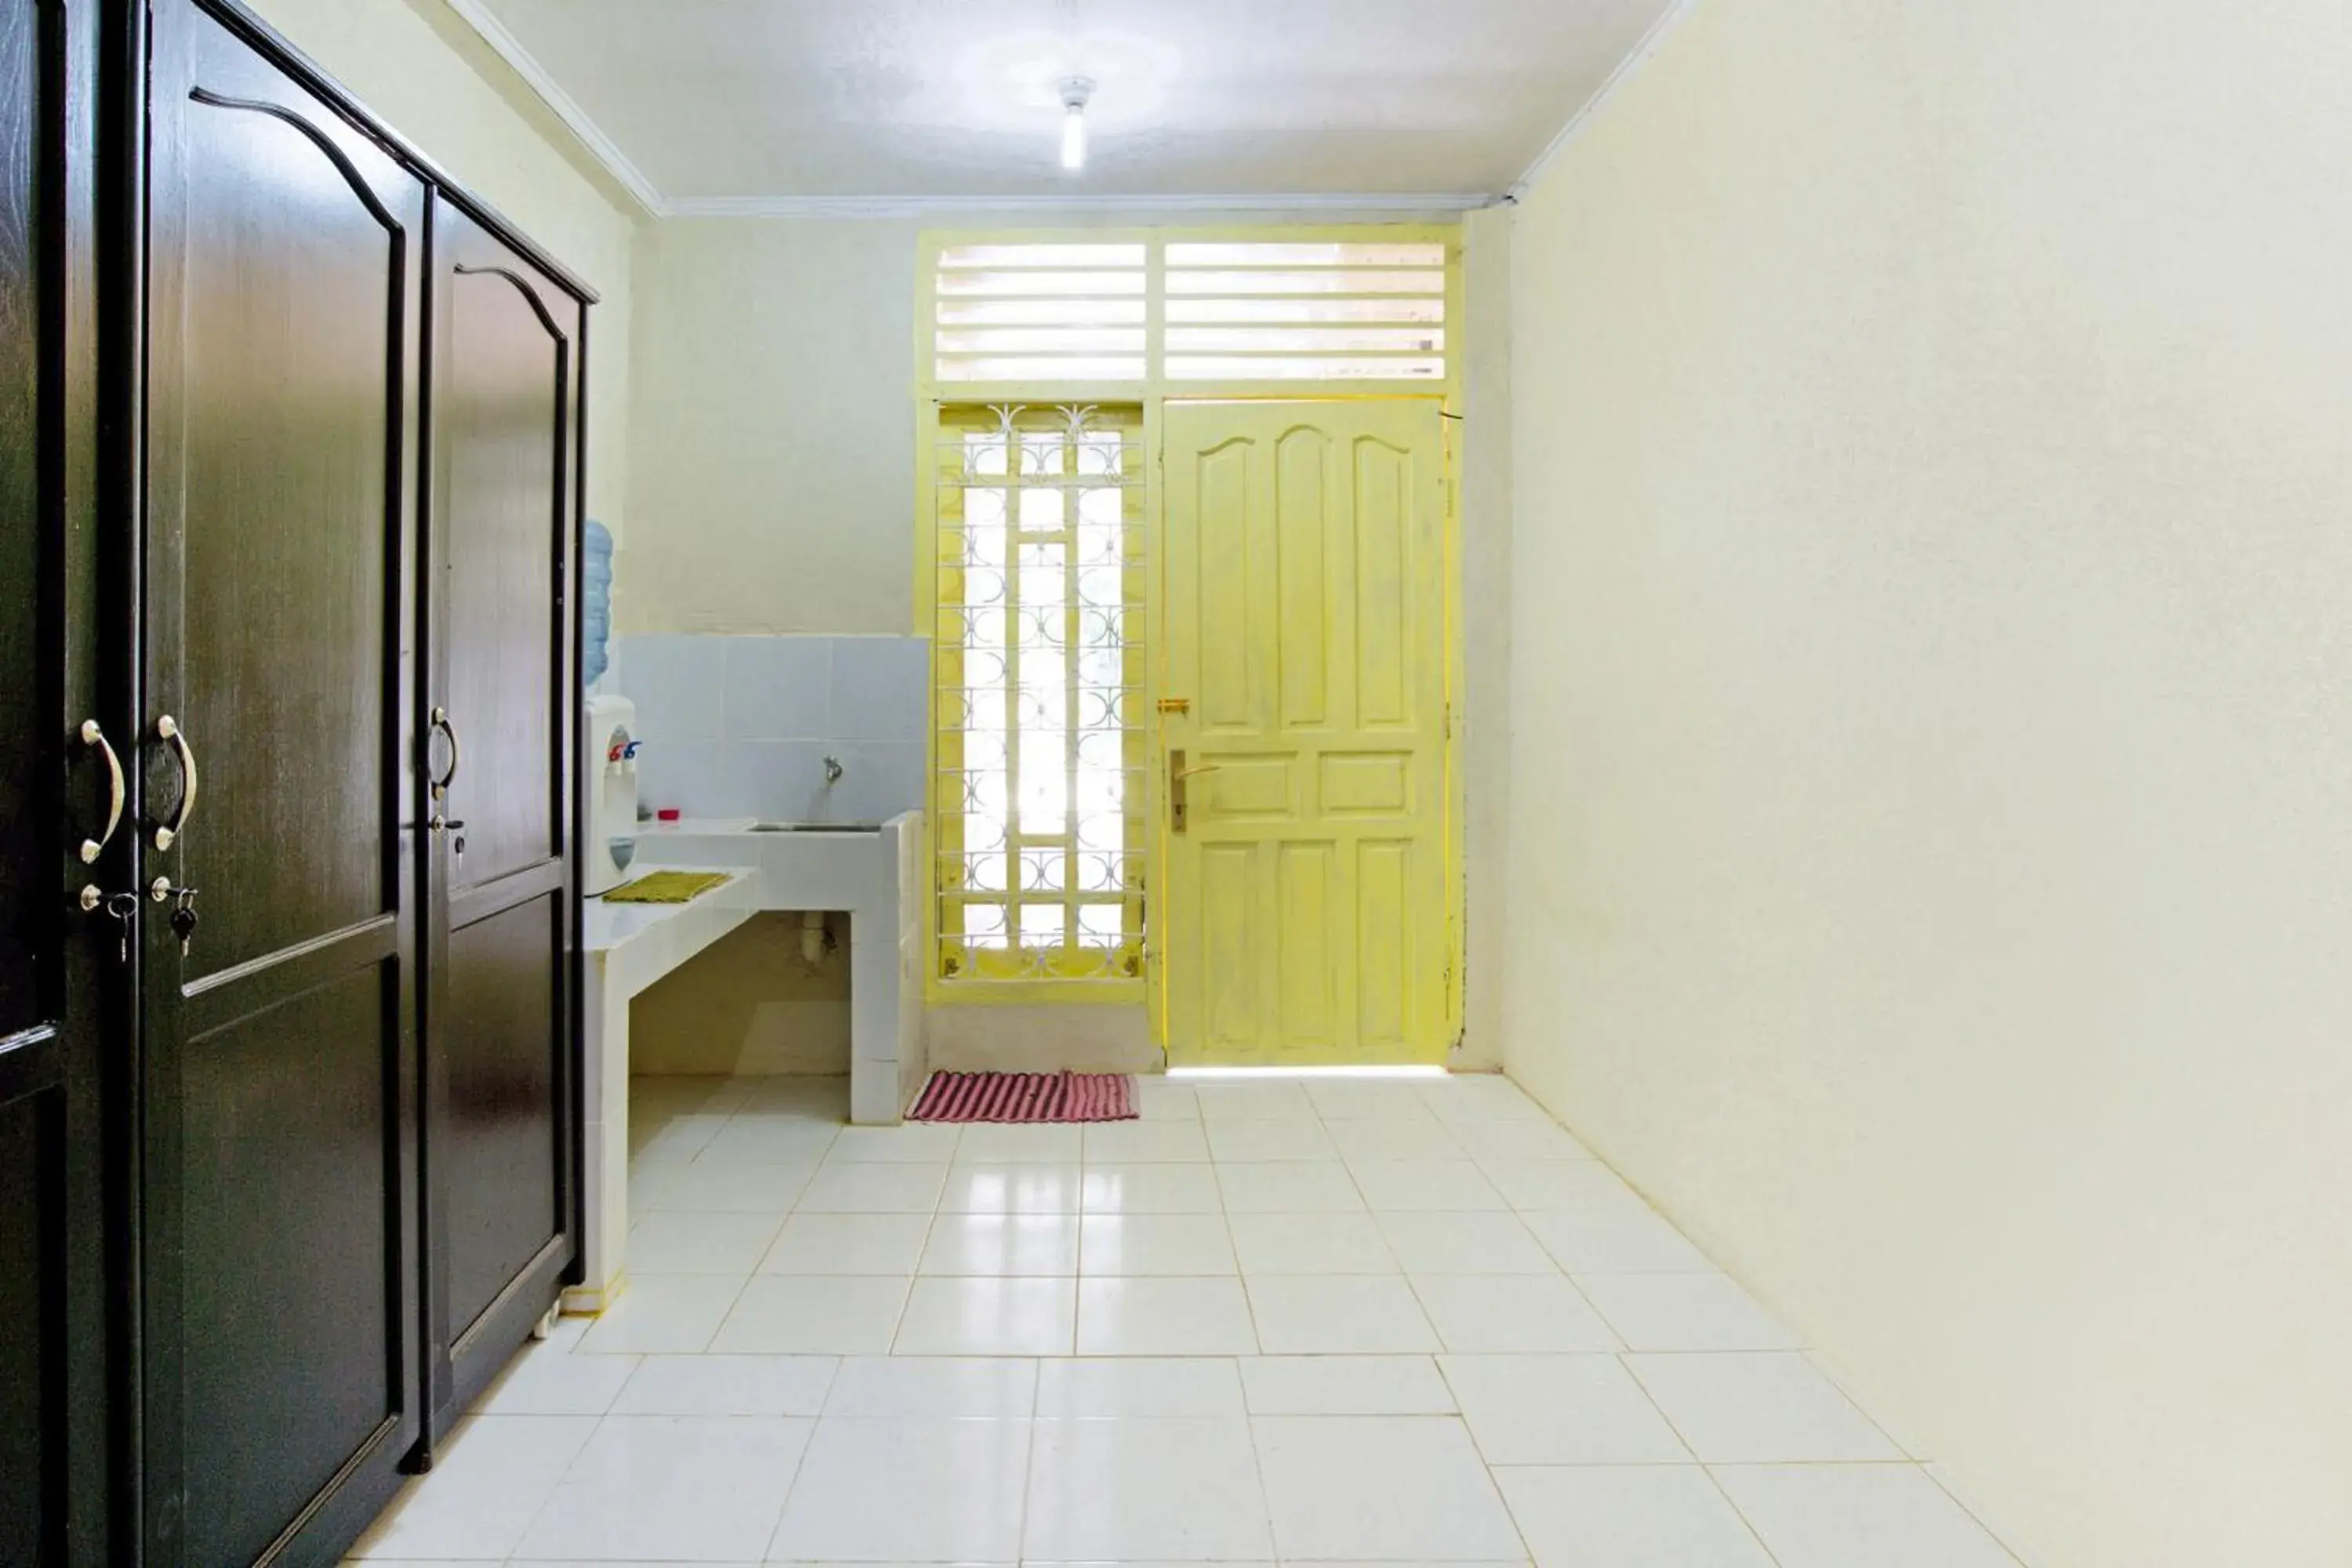 Area and facilities in OYO 3252 Lansano Residence Syariah